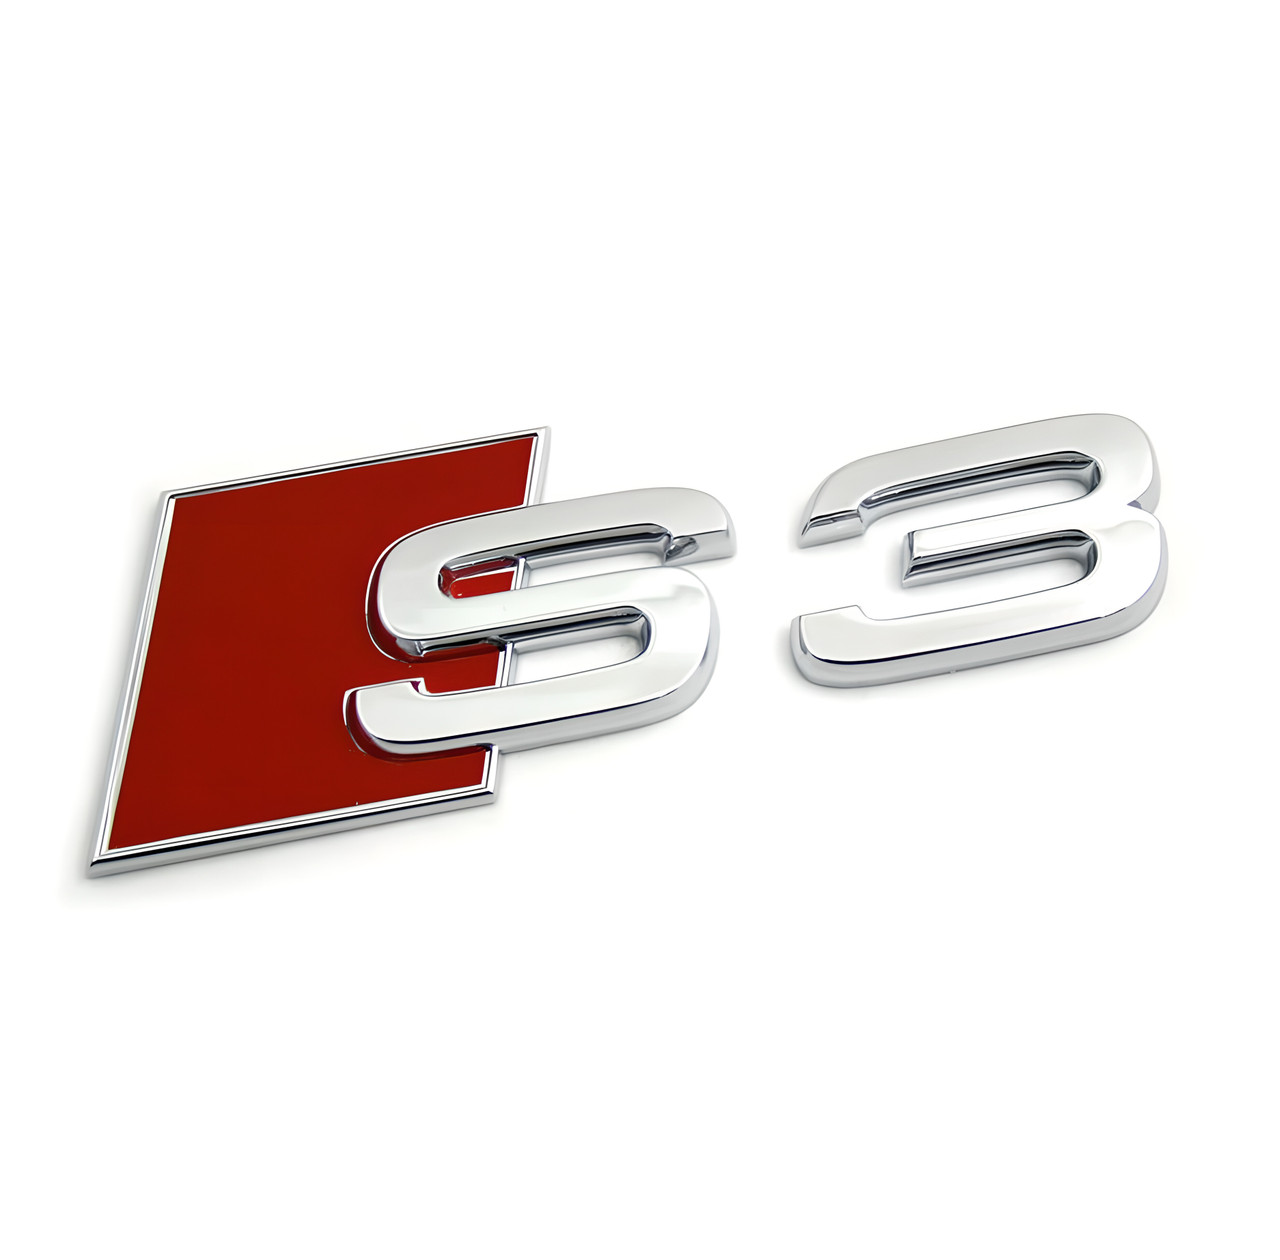 S Line Front Grille Emblem for Audi [Black, Metal, for Grille] - Natalex  Auto